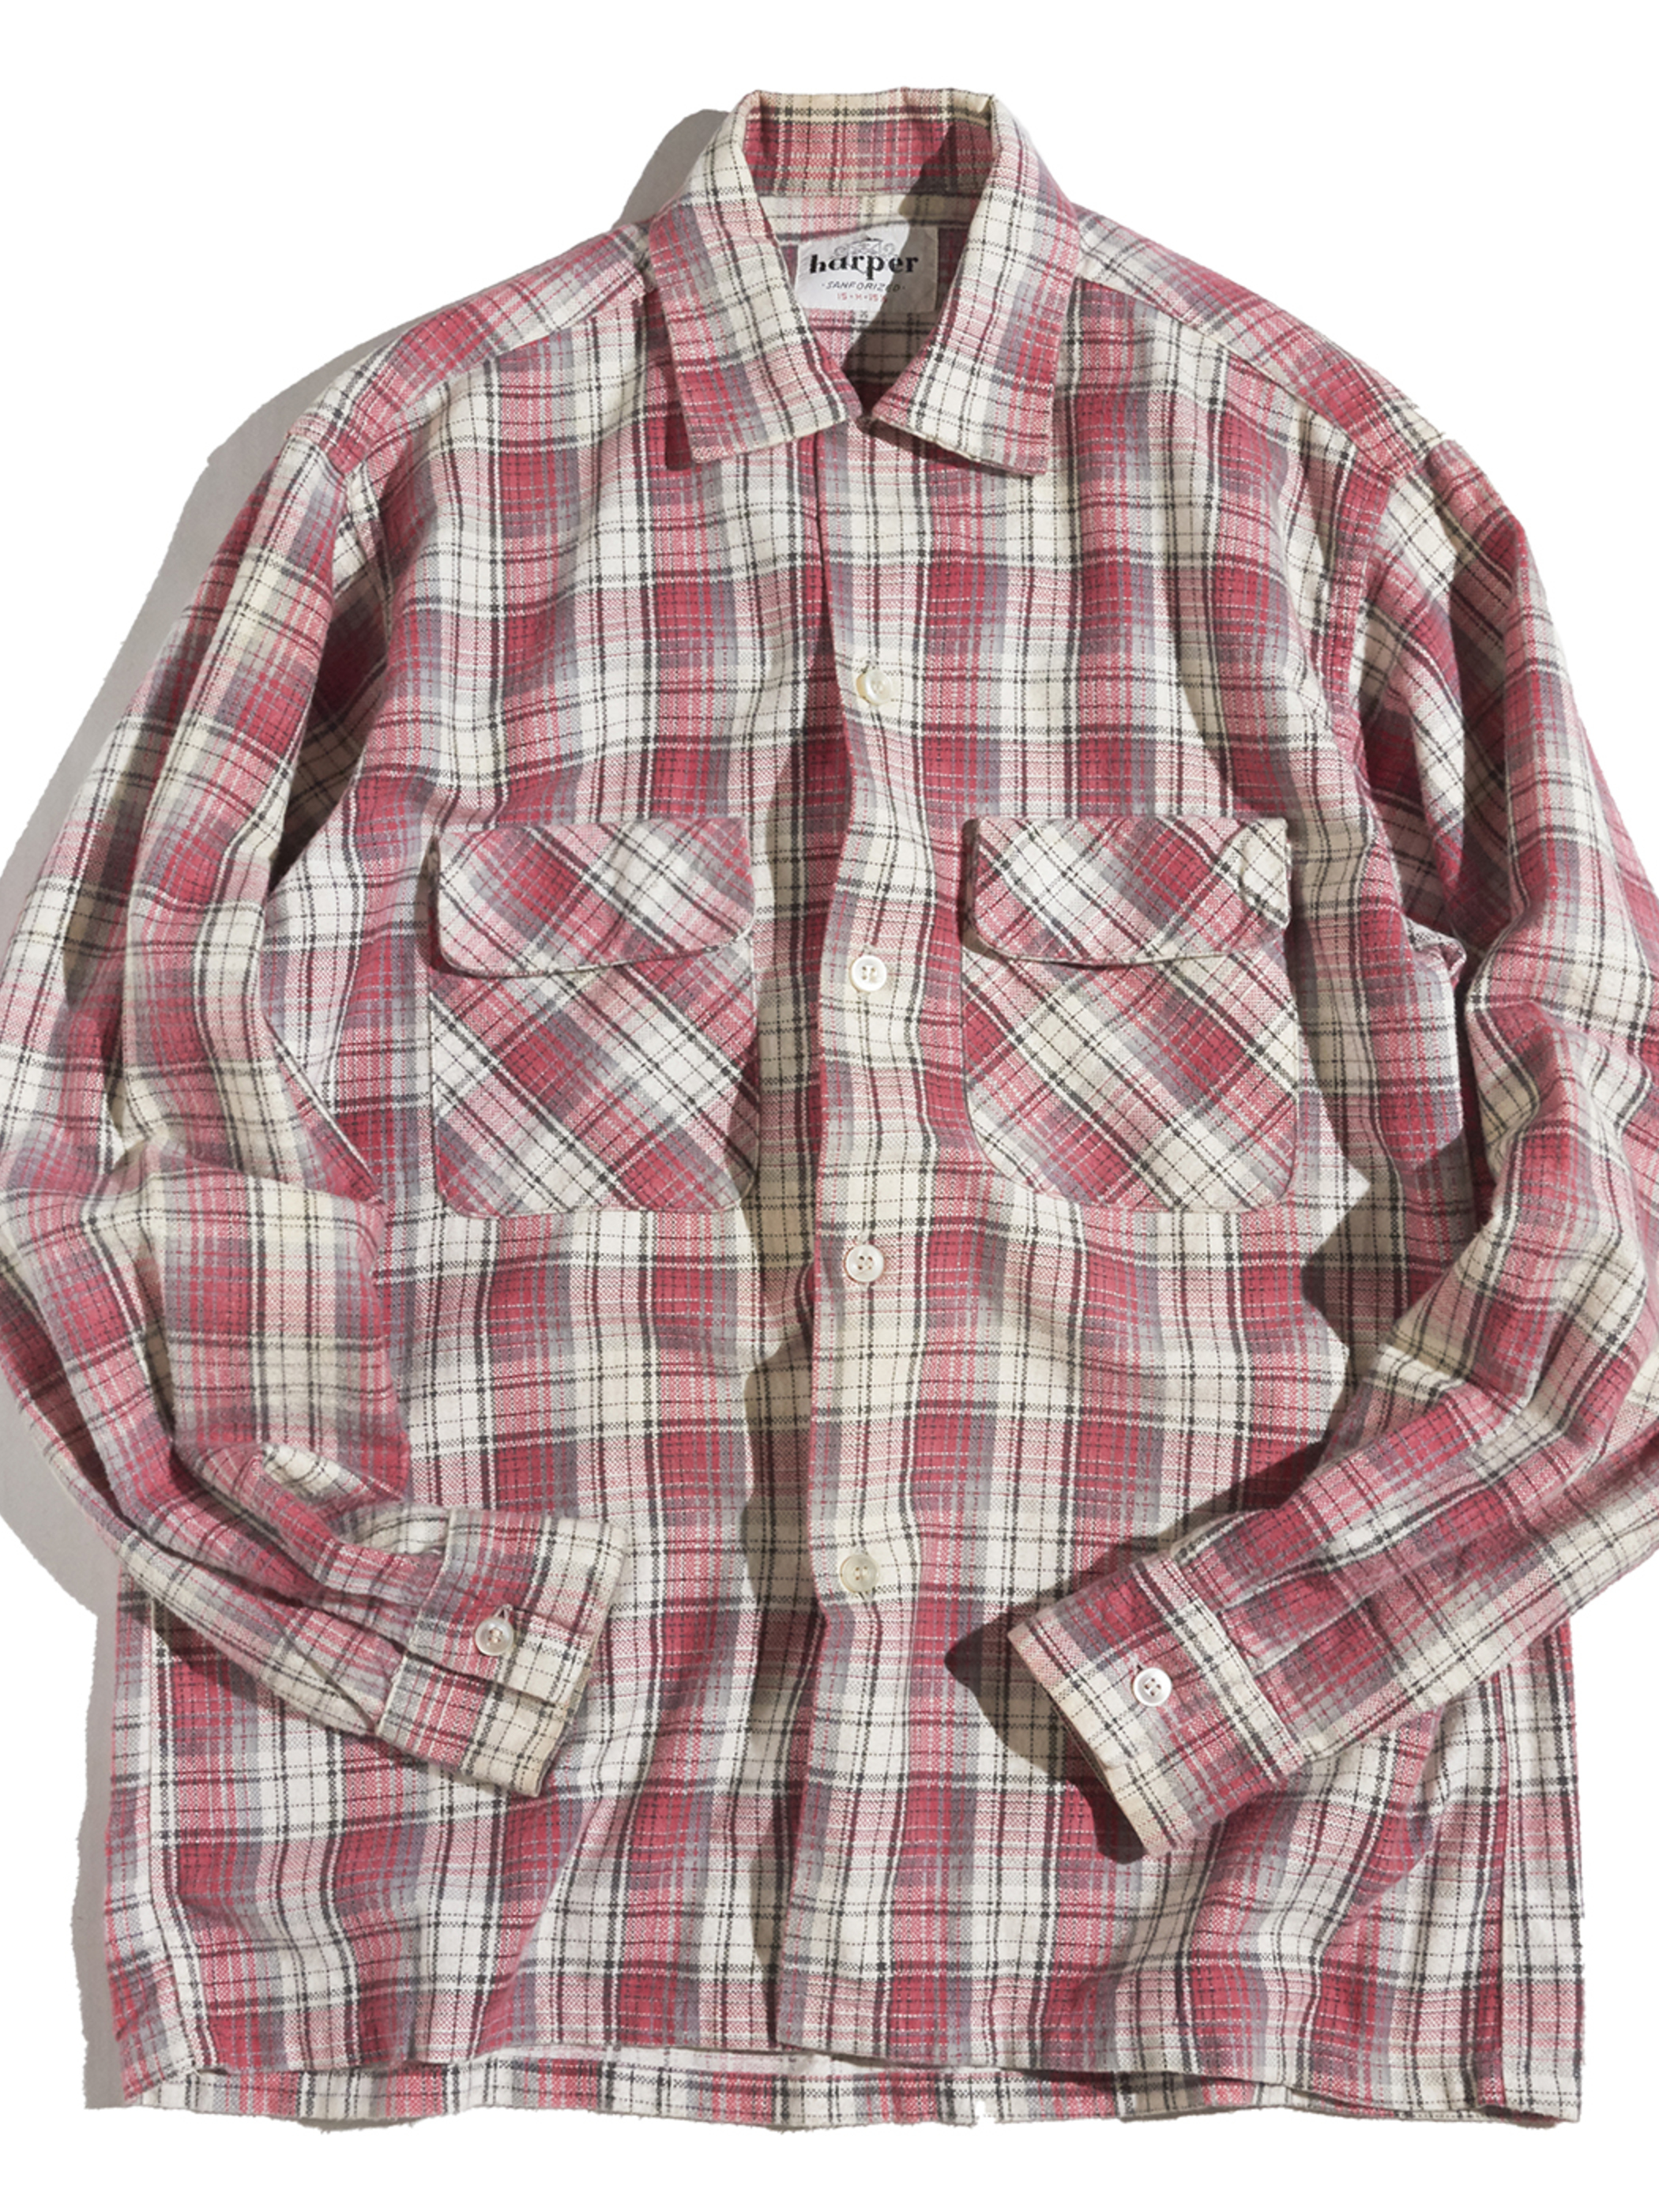 1960s "harper" print flannel check shirt -RED-